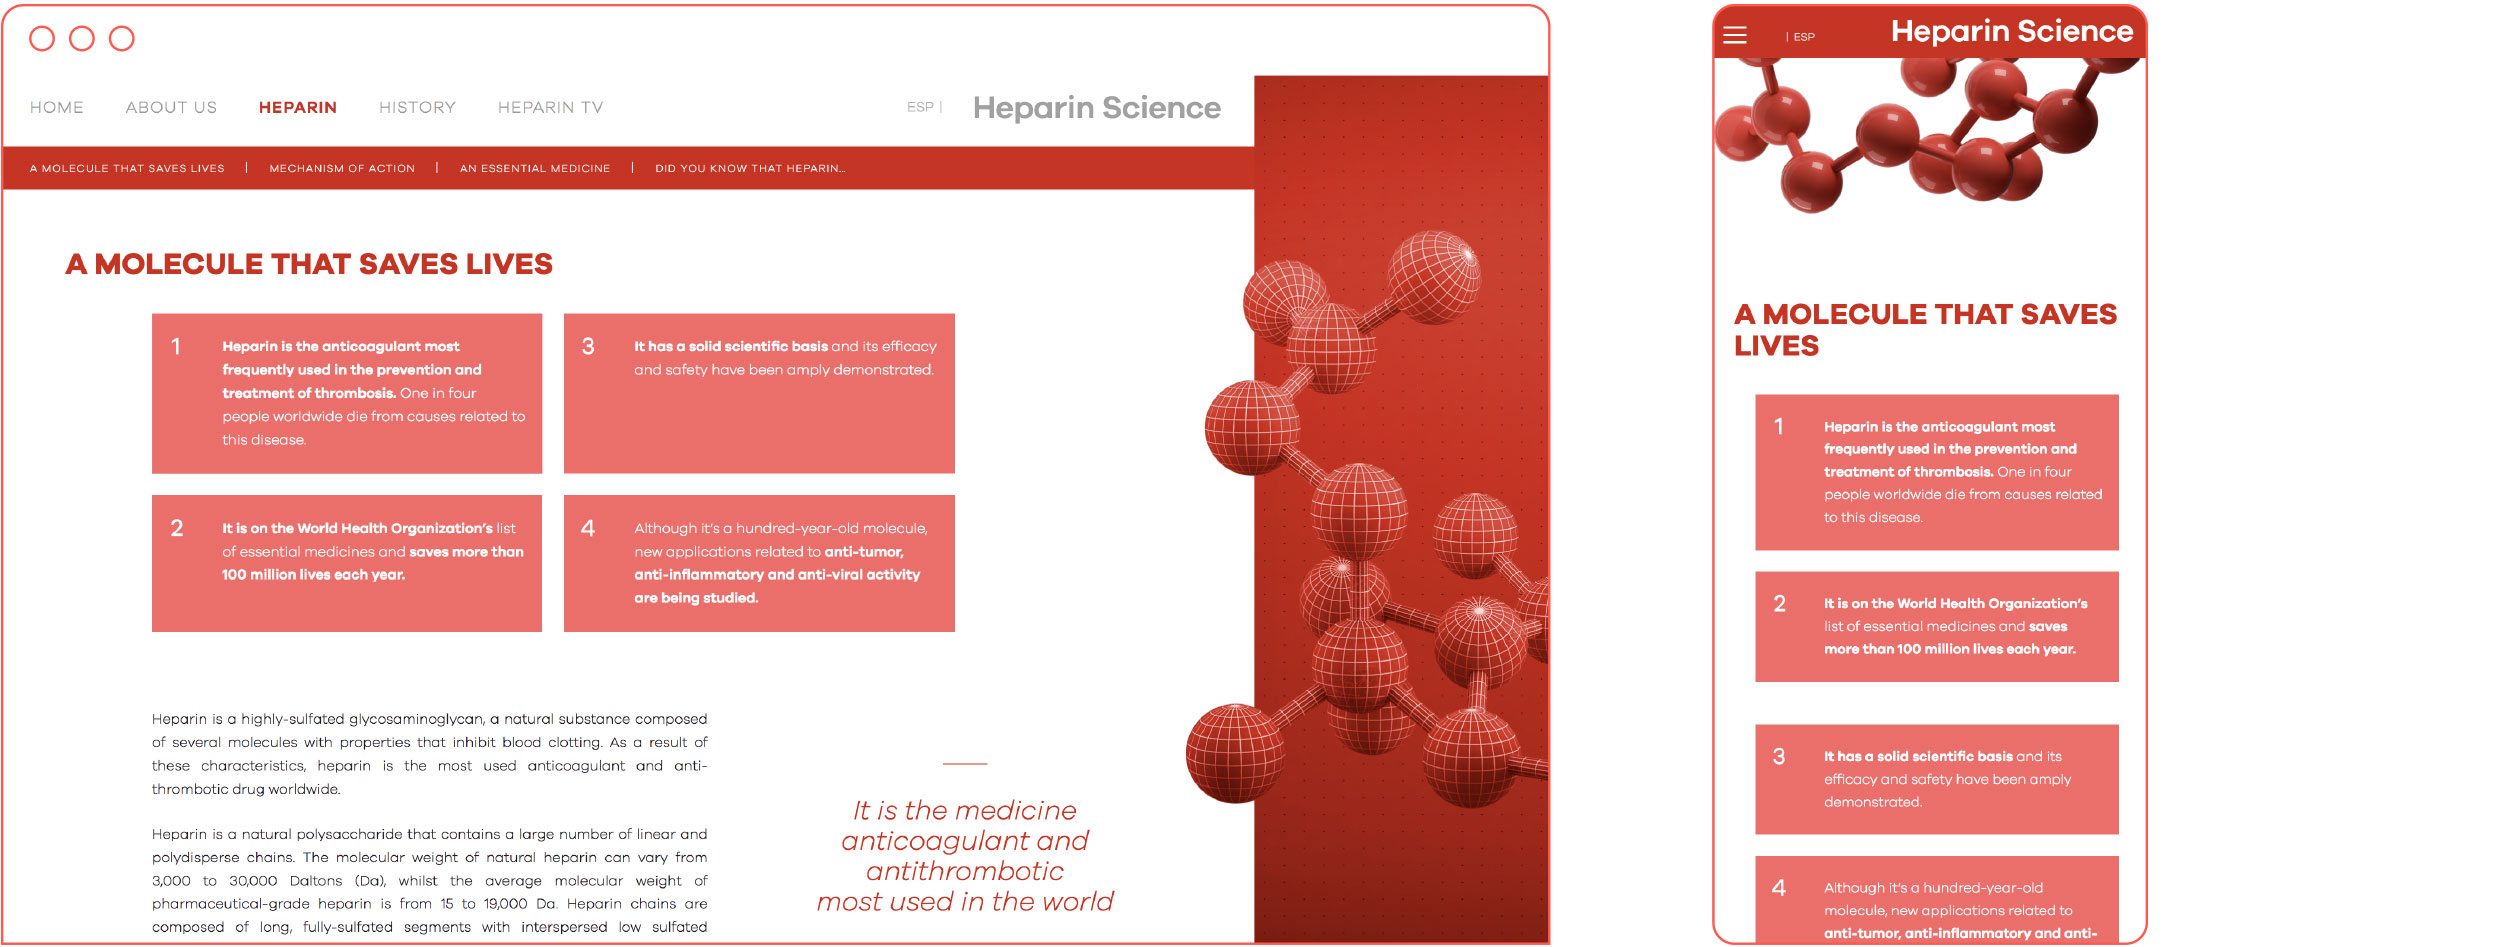 Diseño web_Bioiberica_Heparin Science